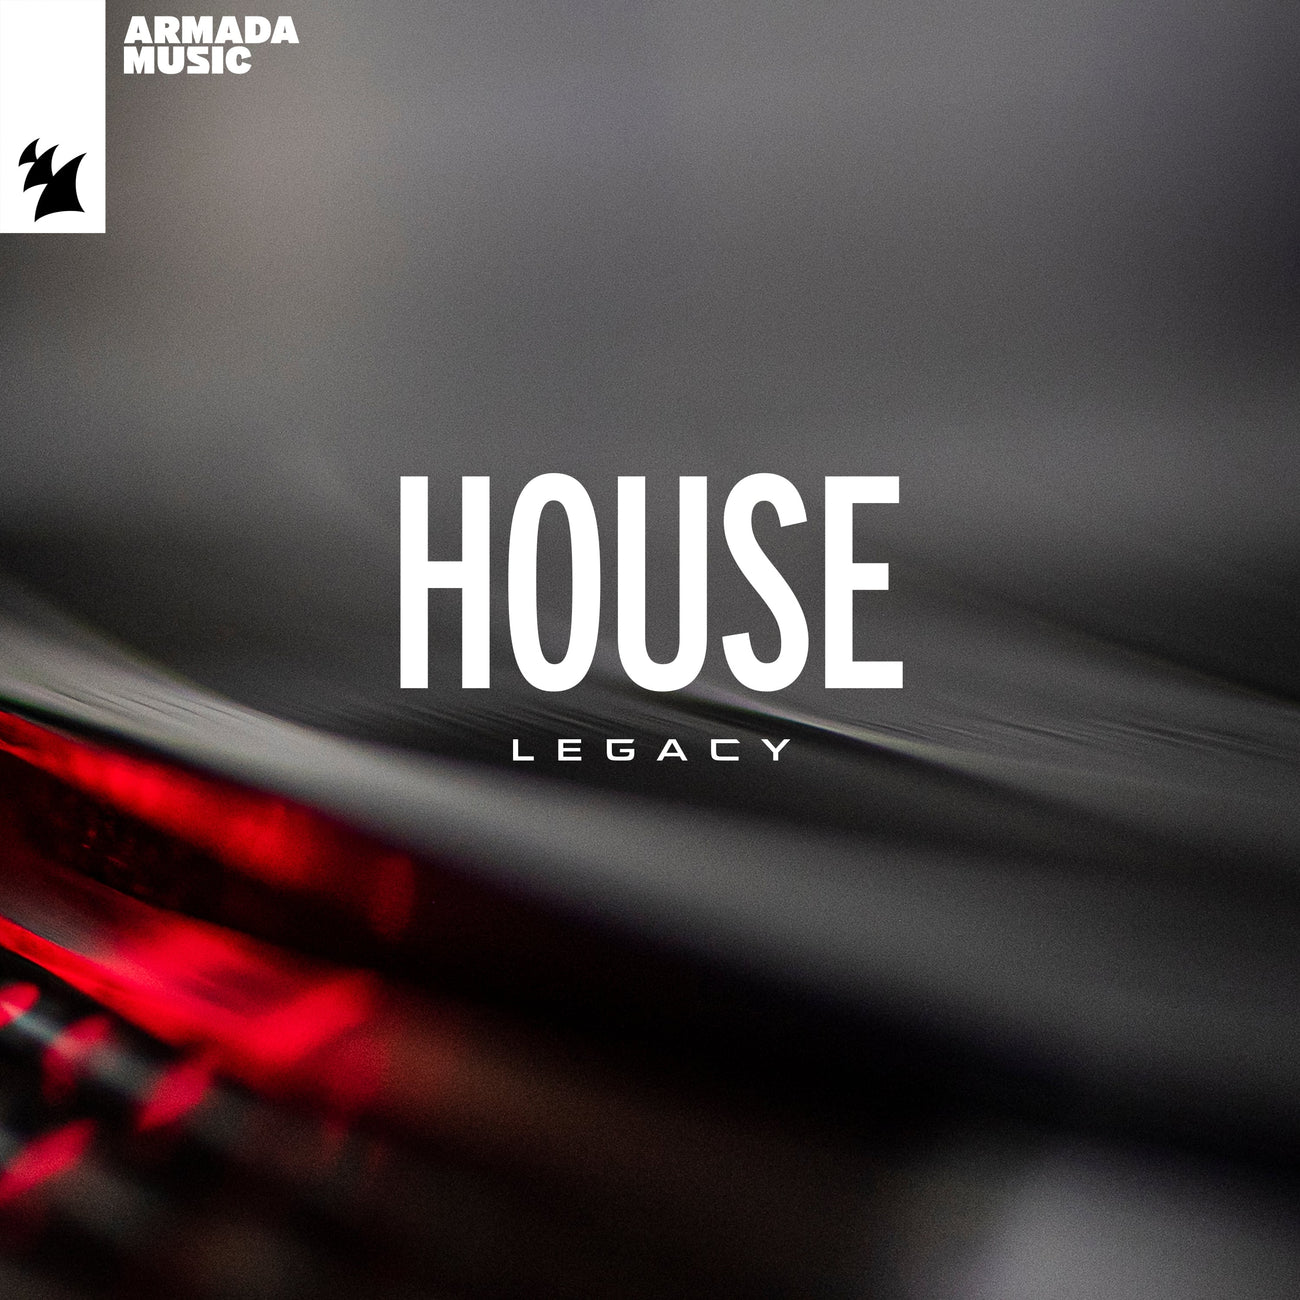 Armada Music - House Legacy (vinyl)